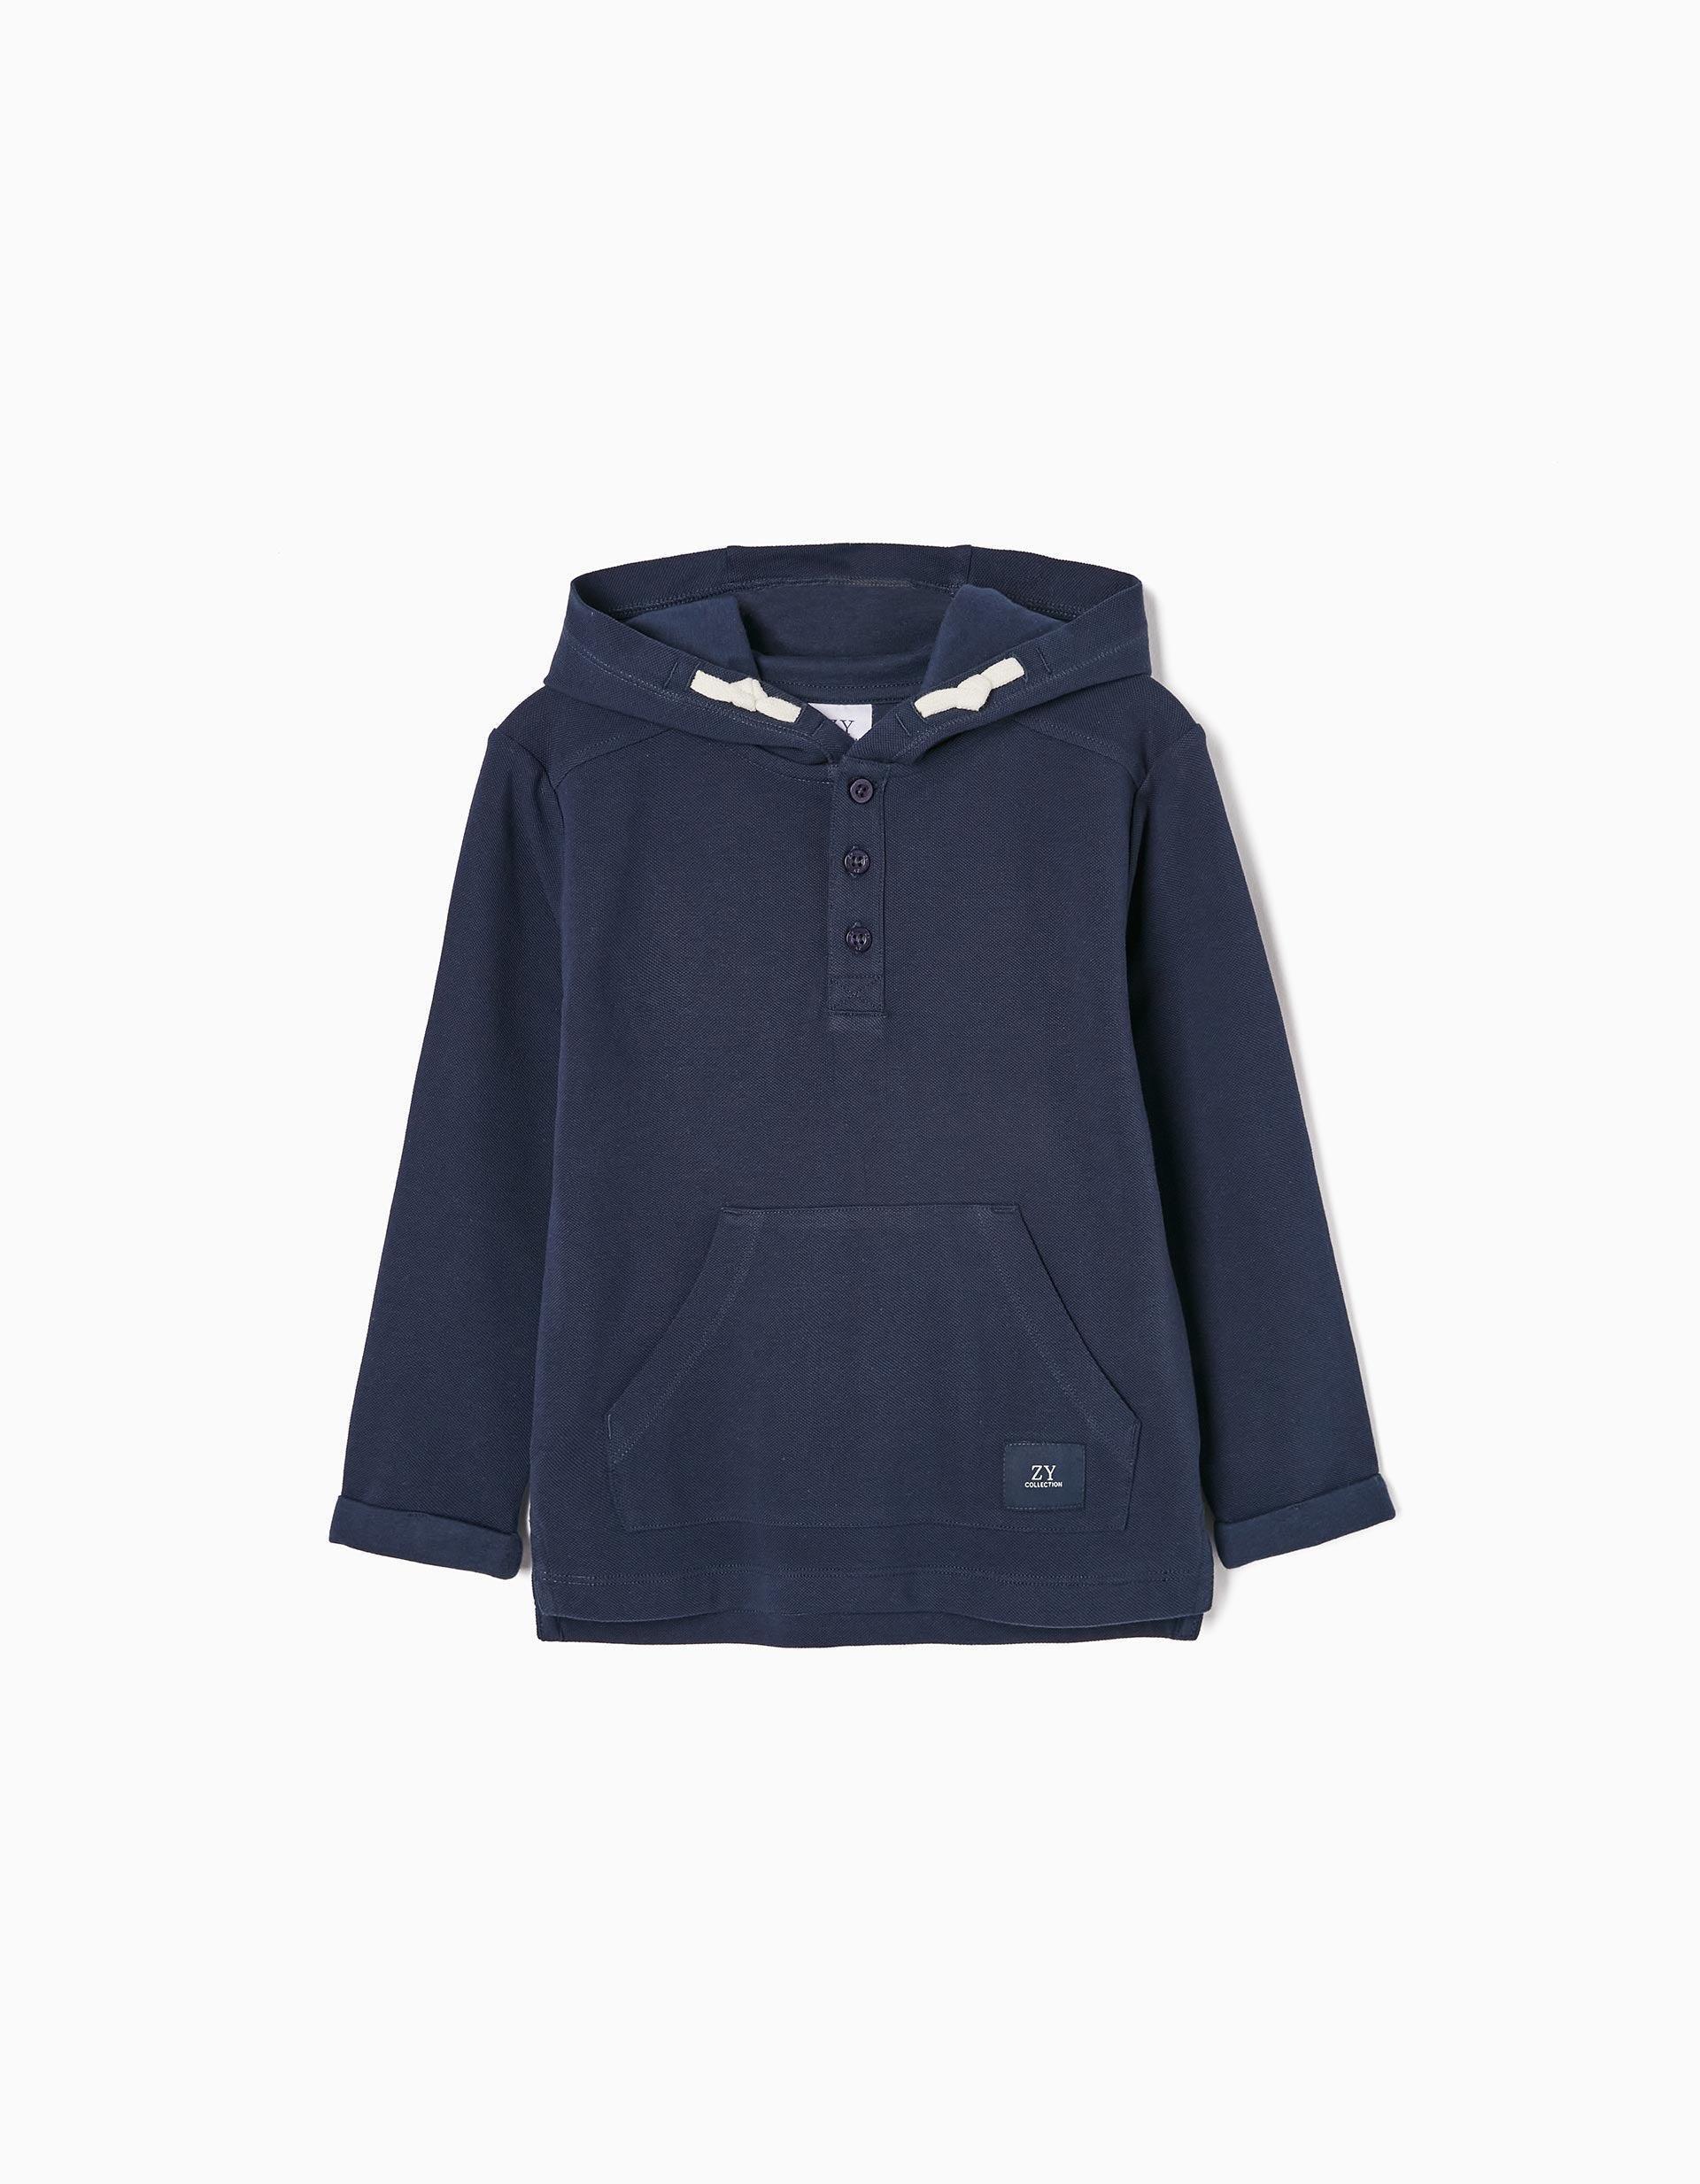 Zippy - Blue Cotton Polo Sweatshirt, Kids Boys